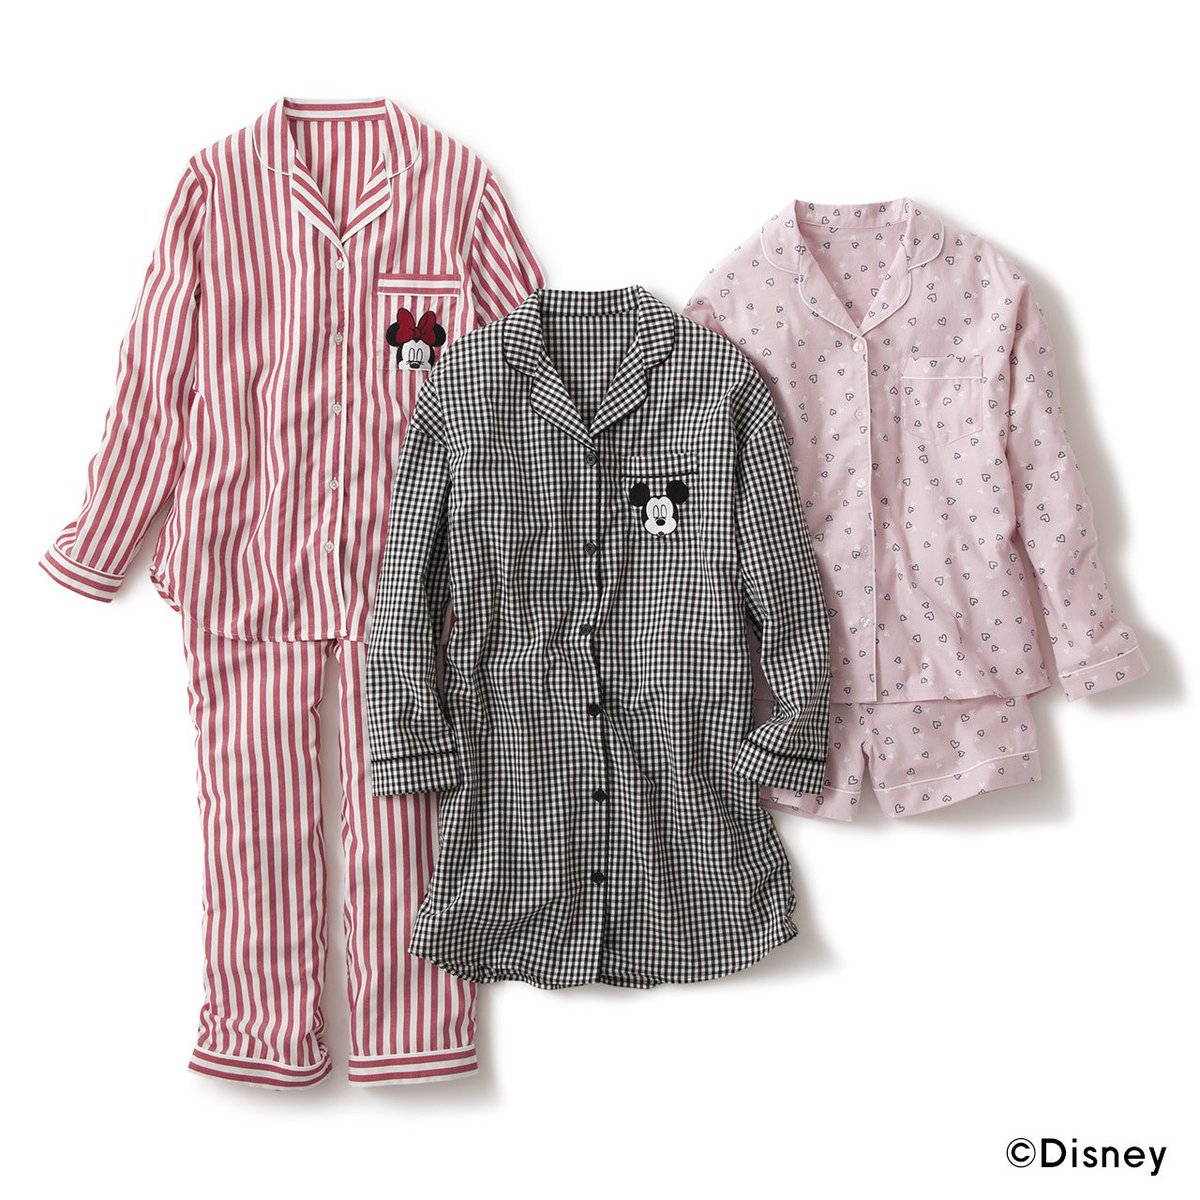 Gu ジーユー Twitterren Coming Soon Disney Pajama Collection Sleeping Dream 7 10 月 にディズニー デザインパジャマの新作が入荷 Disney Guパジャマ